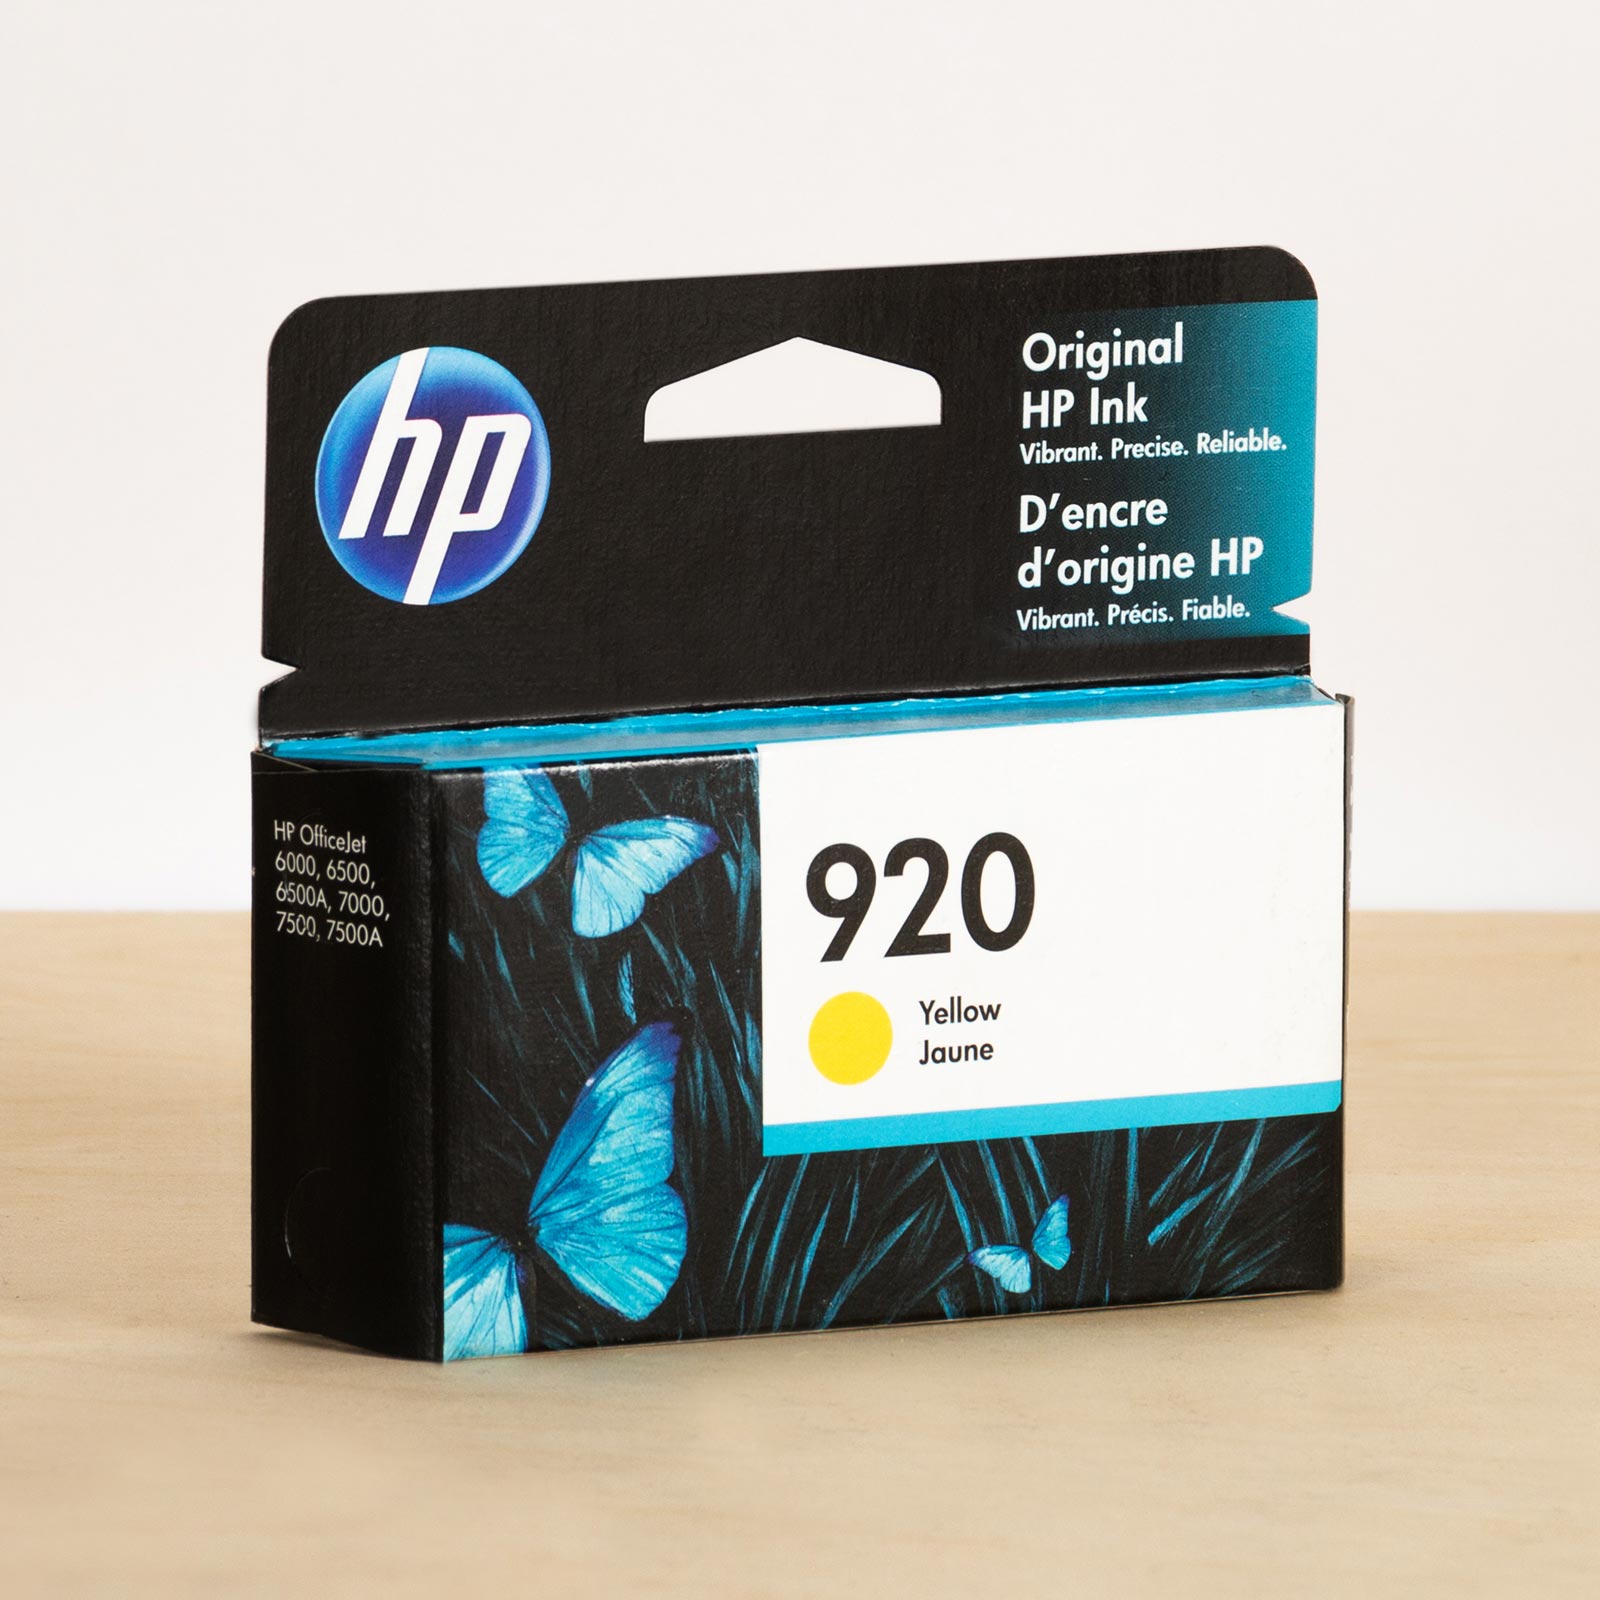 Hp ink-yellow-HP-OfficeJet-6000